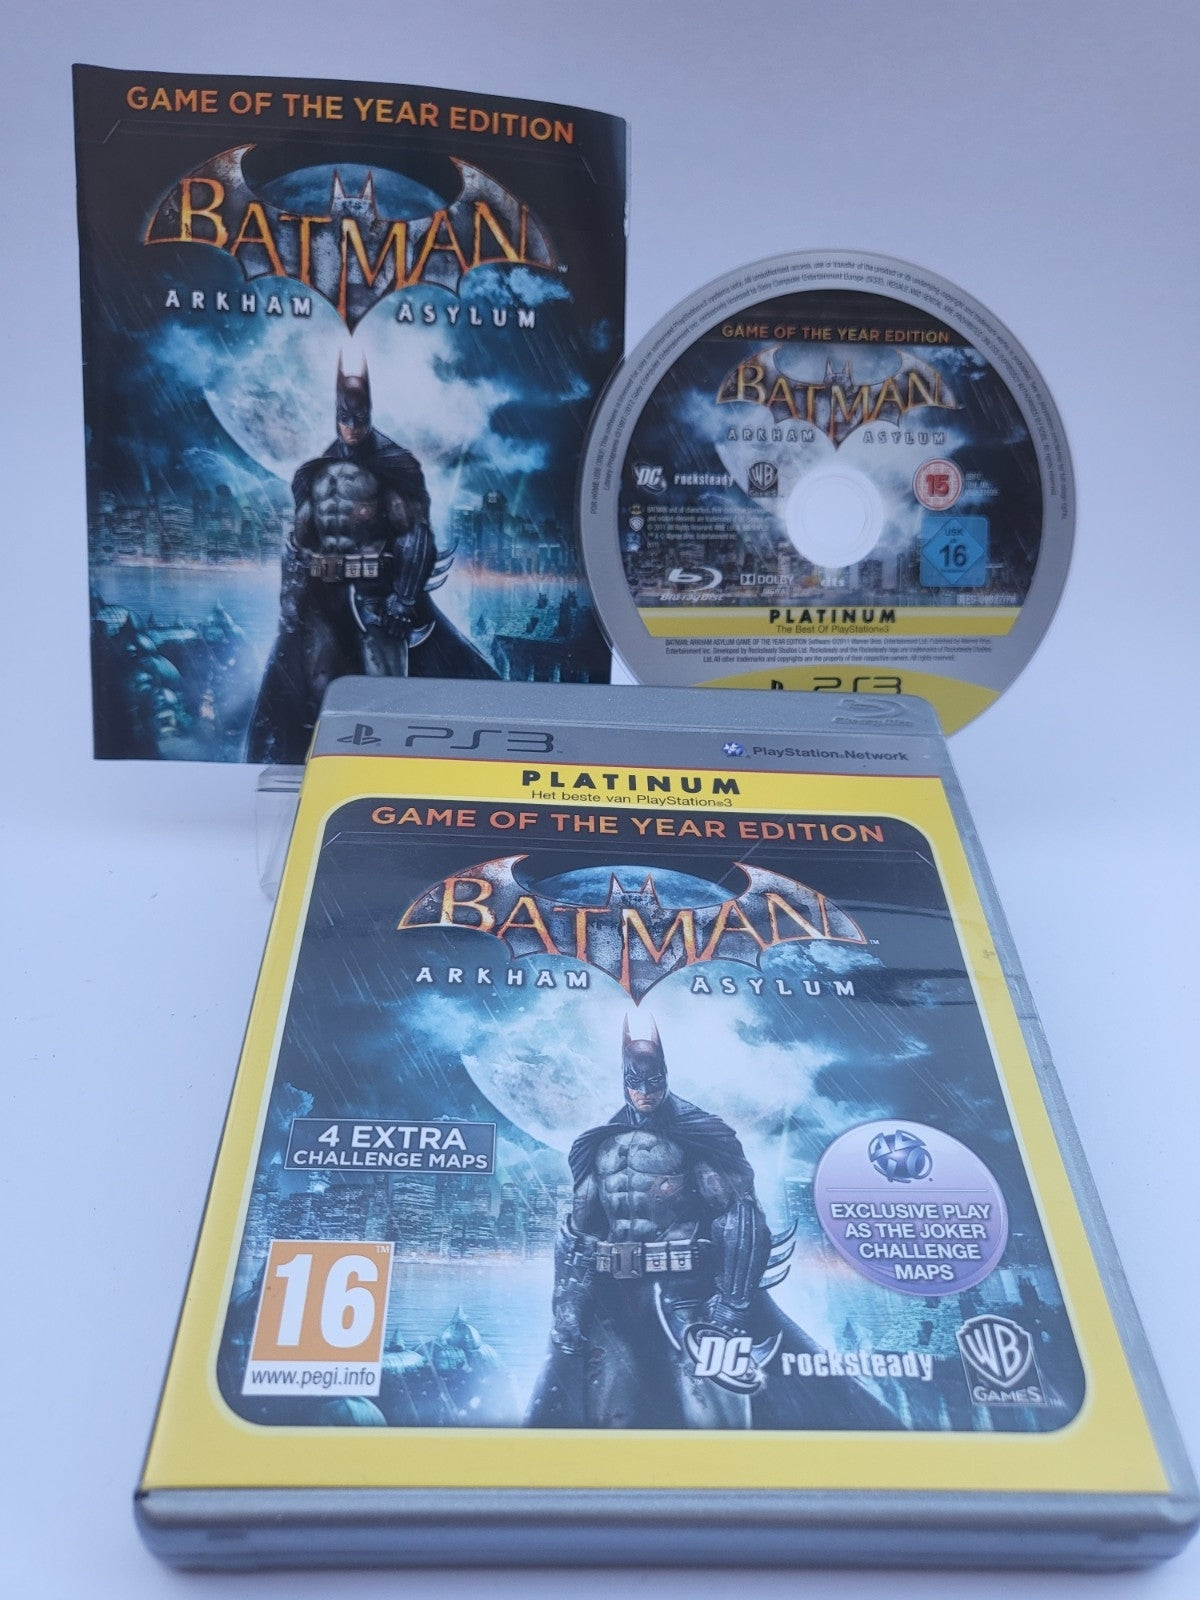 Batman Arkham Asylum Game of the Year Edition Platinum voor de Playstation 3